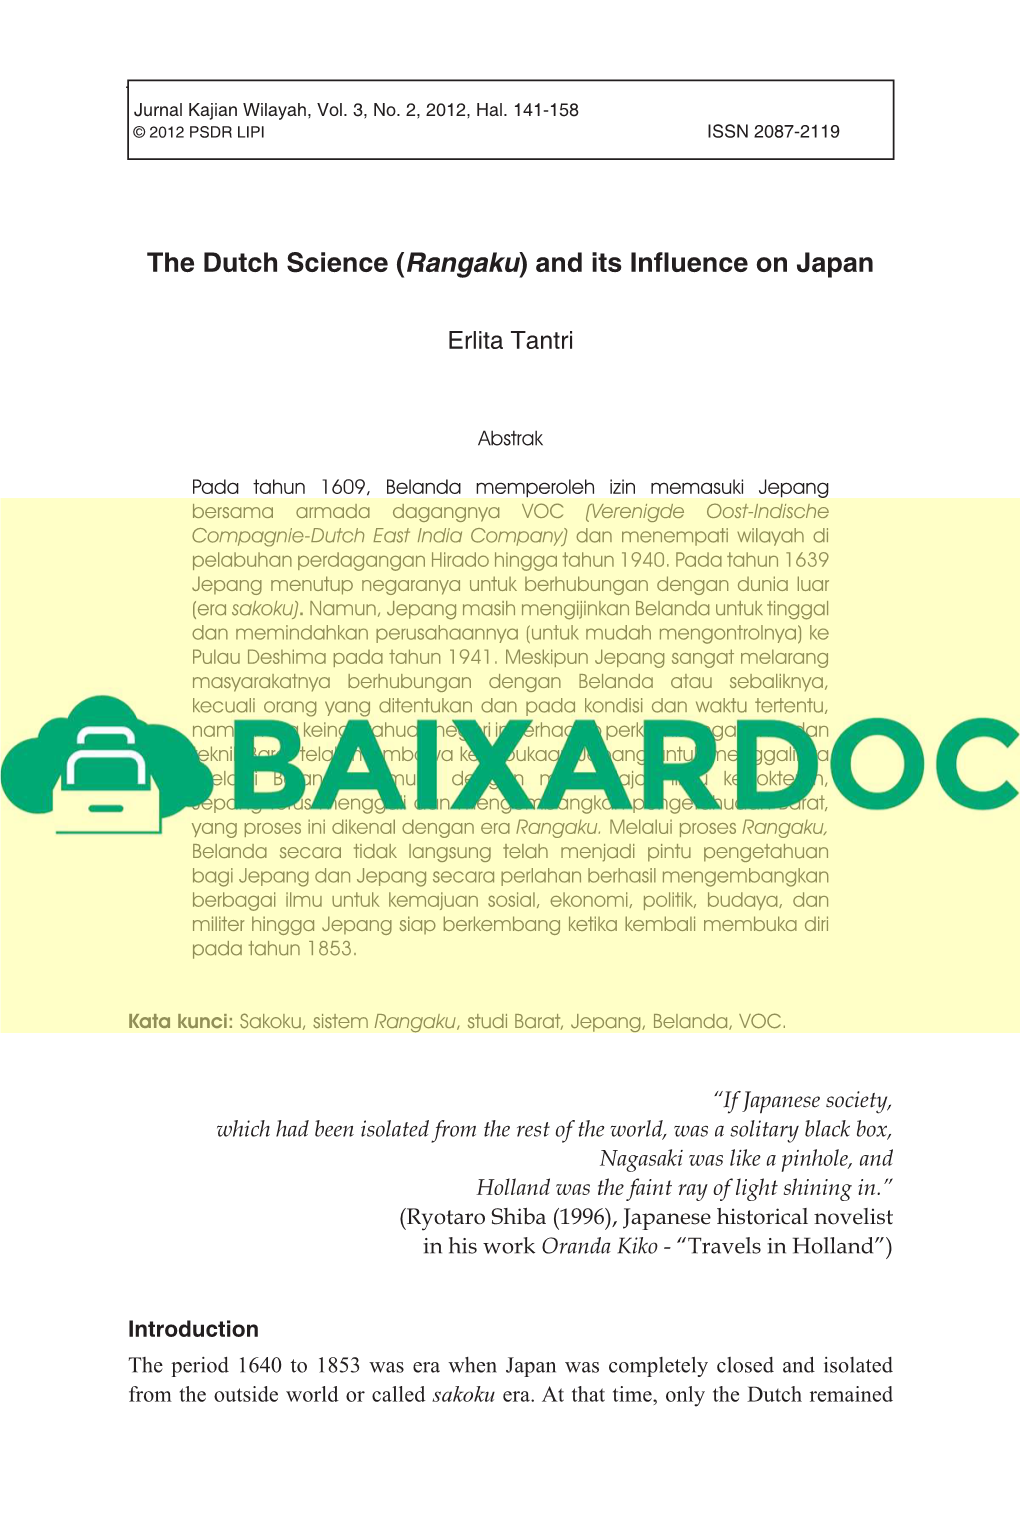 2 the Dutch Science Rangaku and Its Influence on Japan JKWPSDR Vol